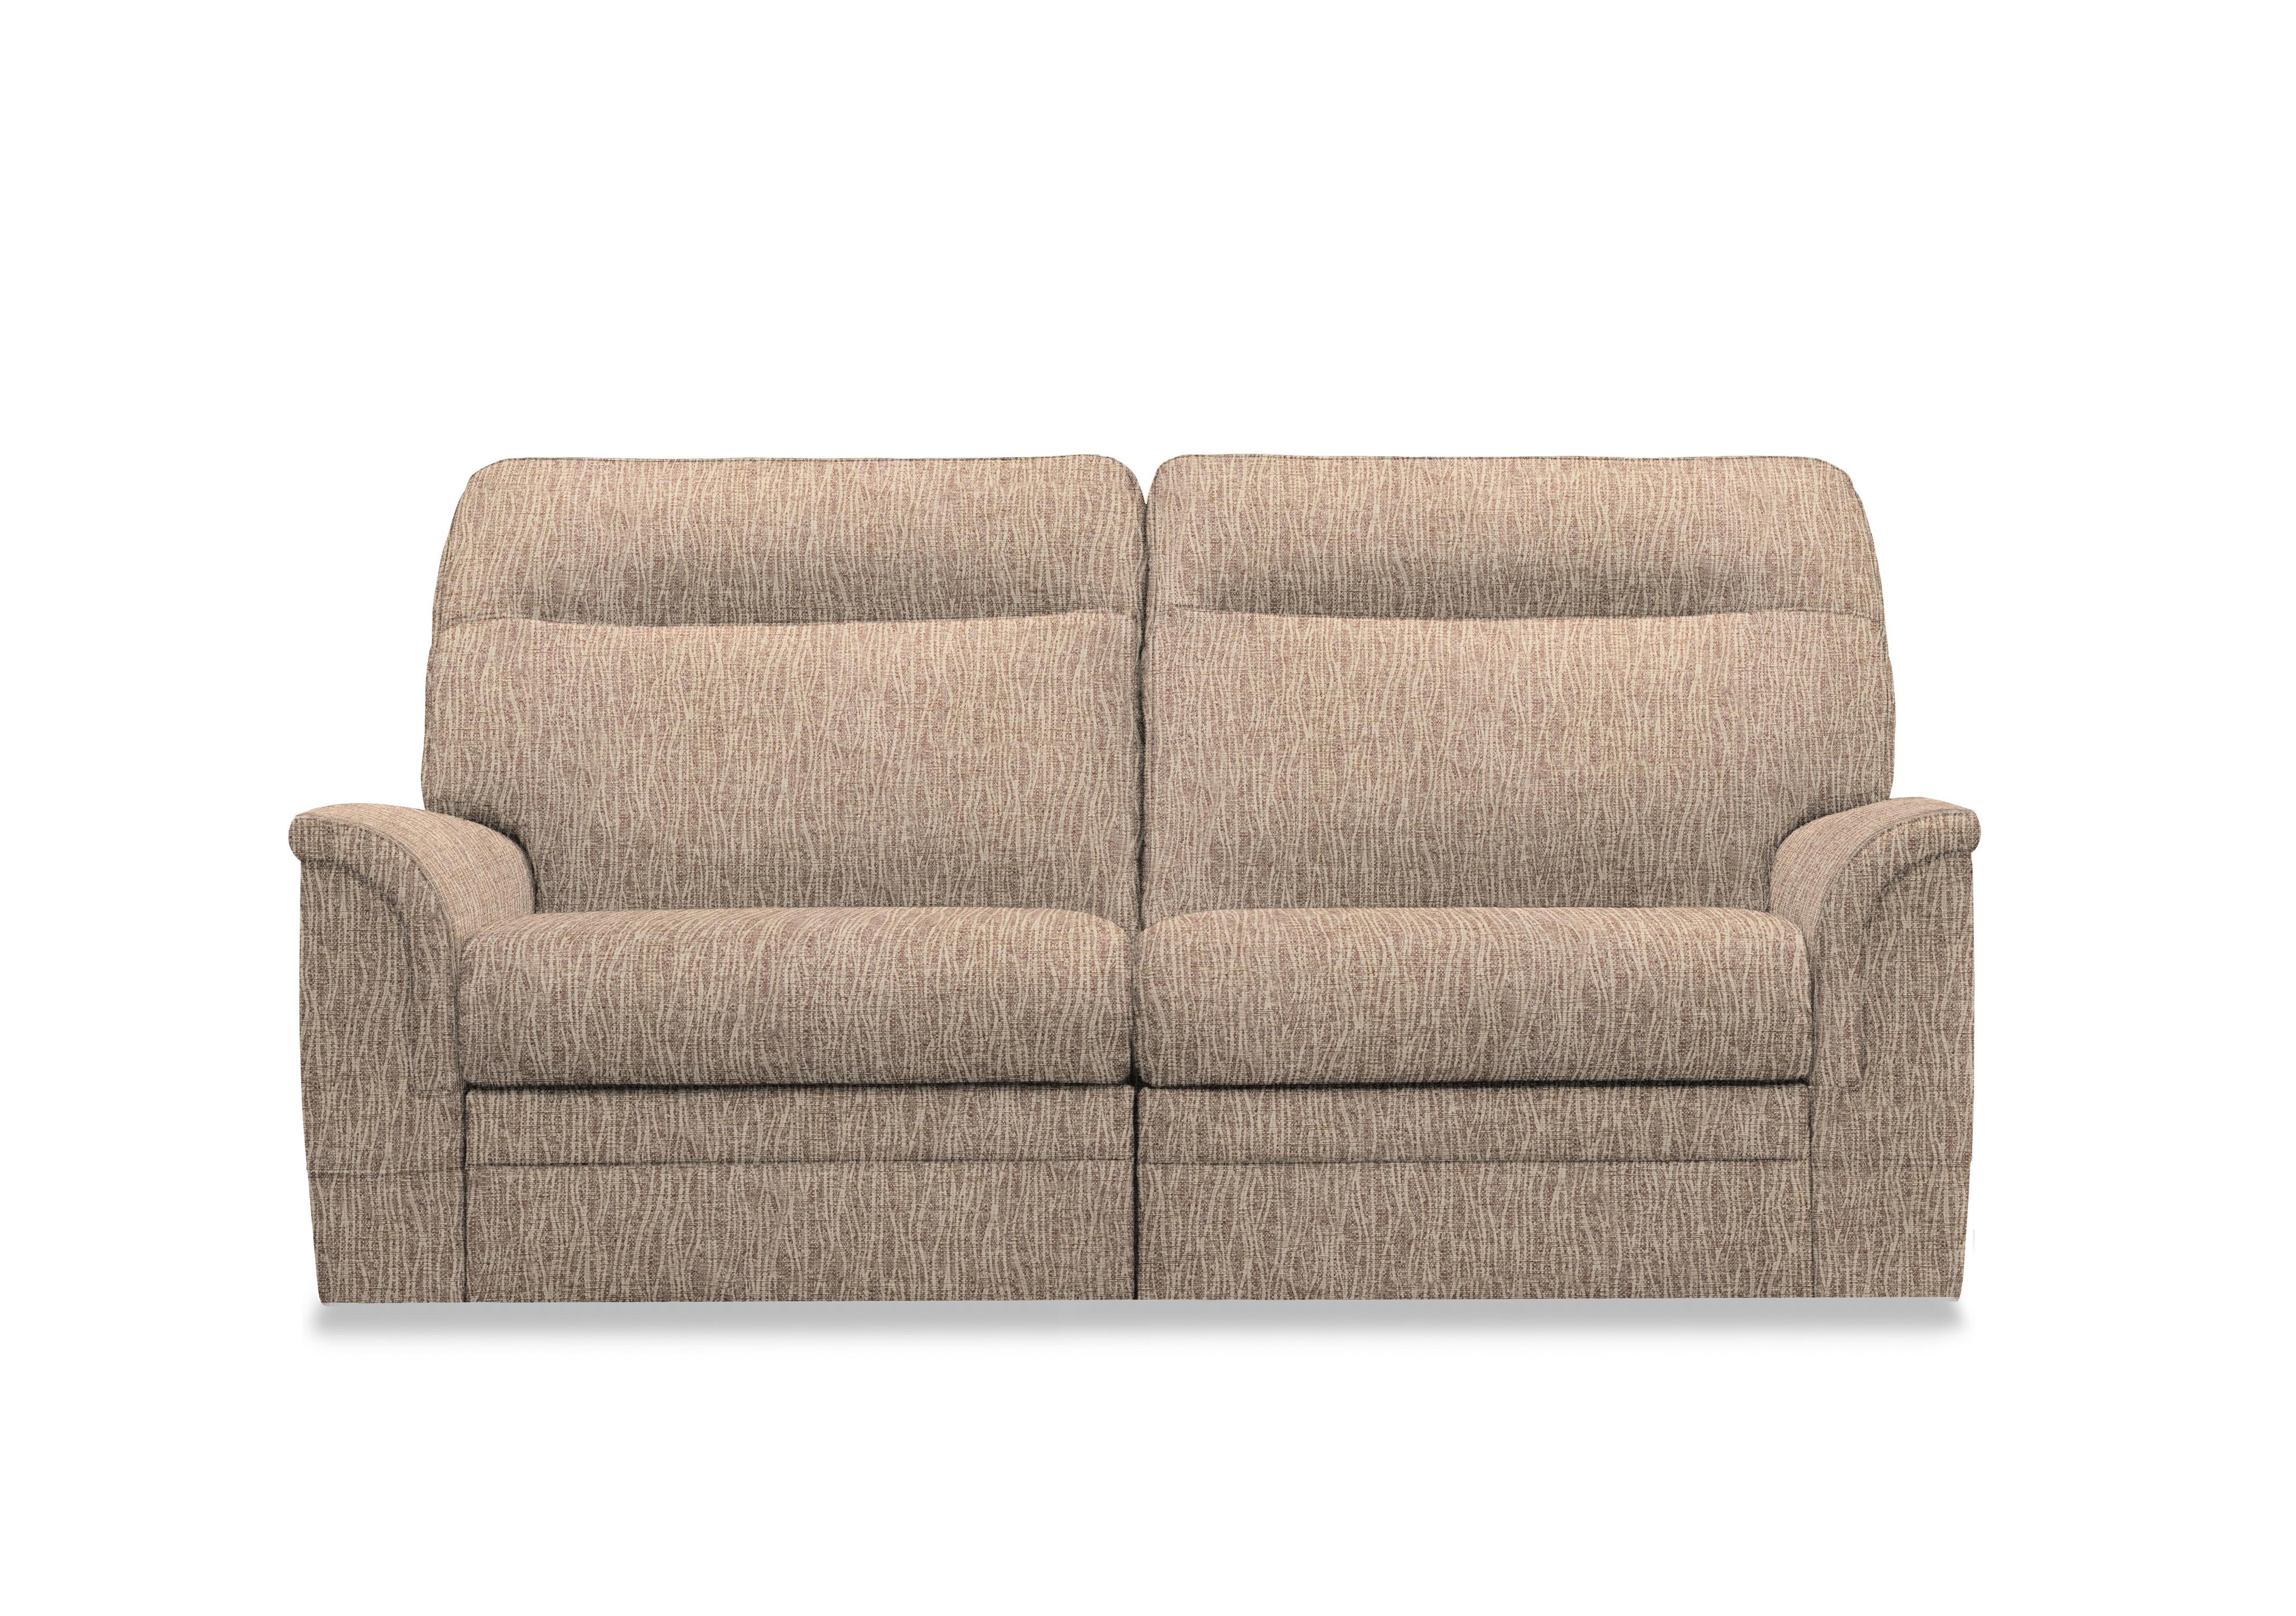 Hudson 23 Large 2 Seater Fabric Sofa in Dune Sand 001482-0054 on Furniture Village